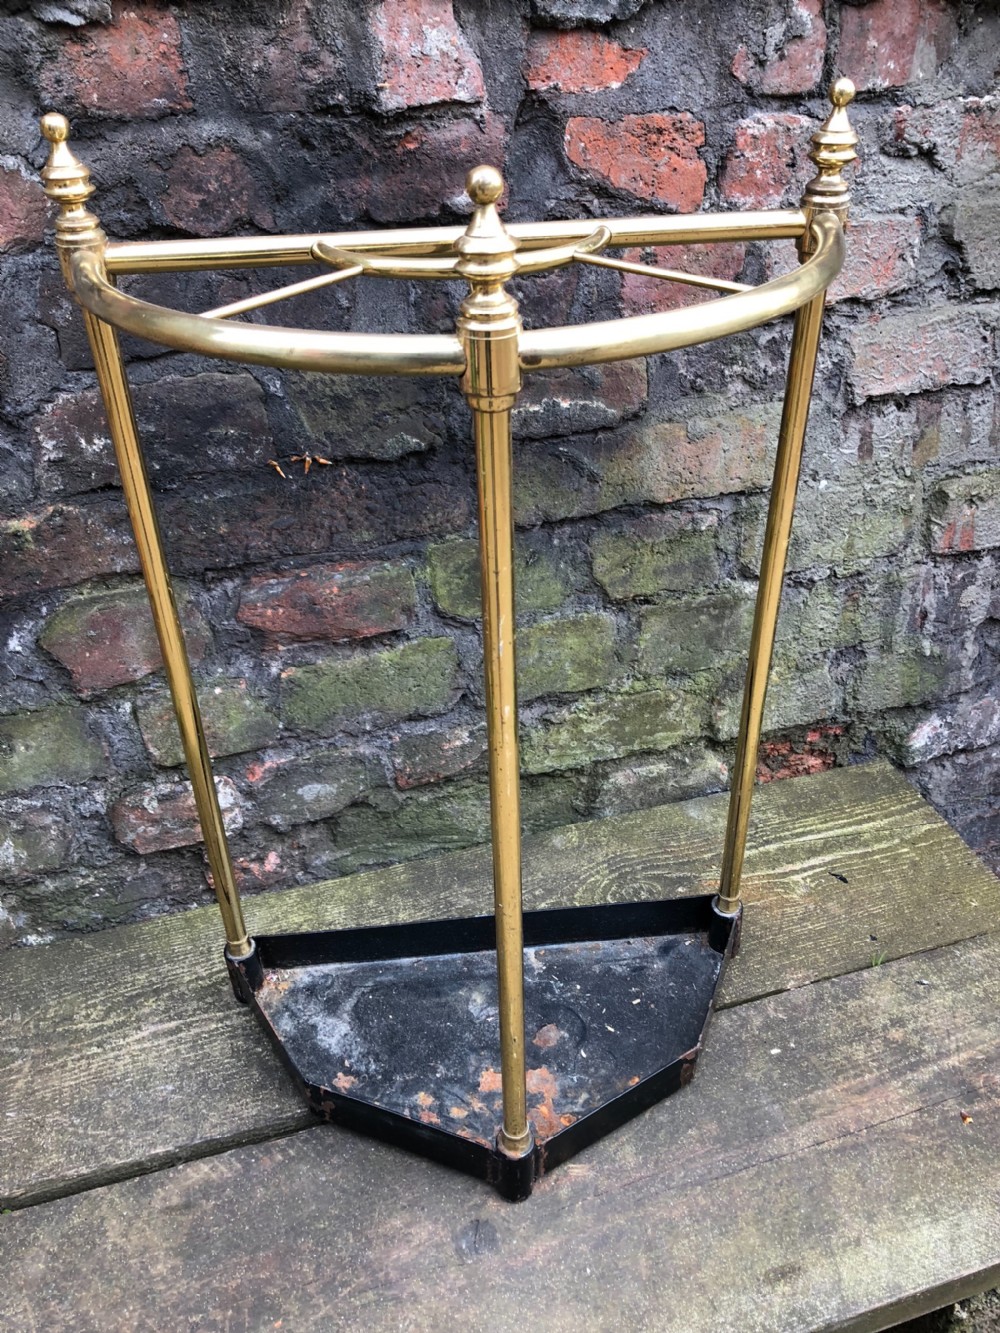 edwardian brass and steel umbrella stick stand